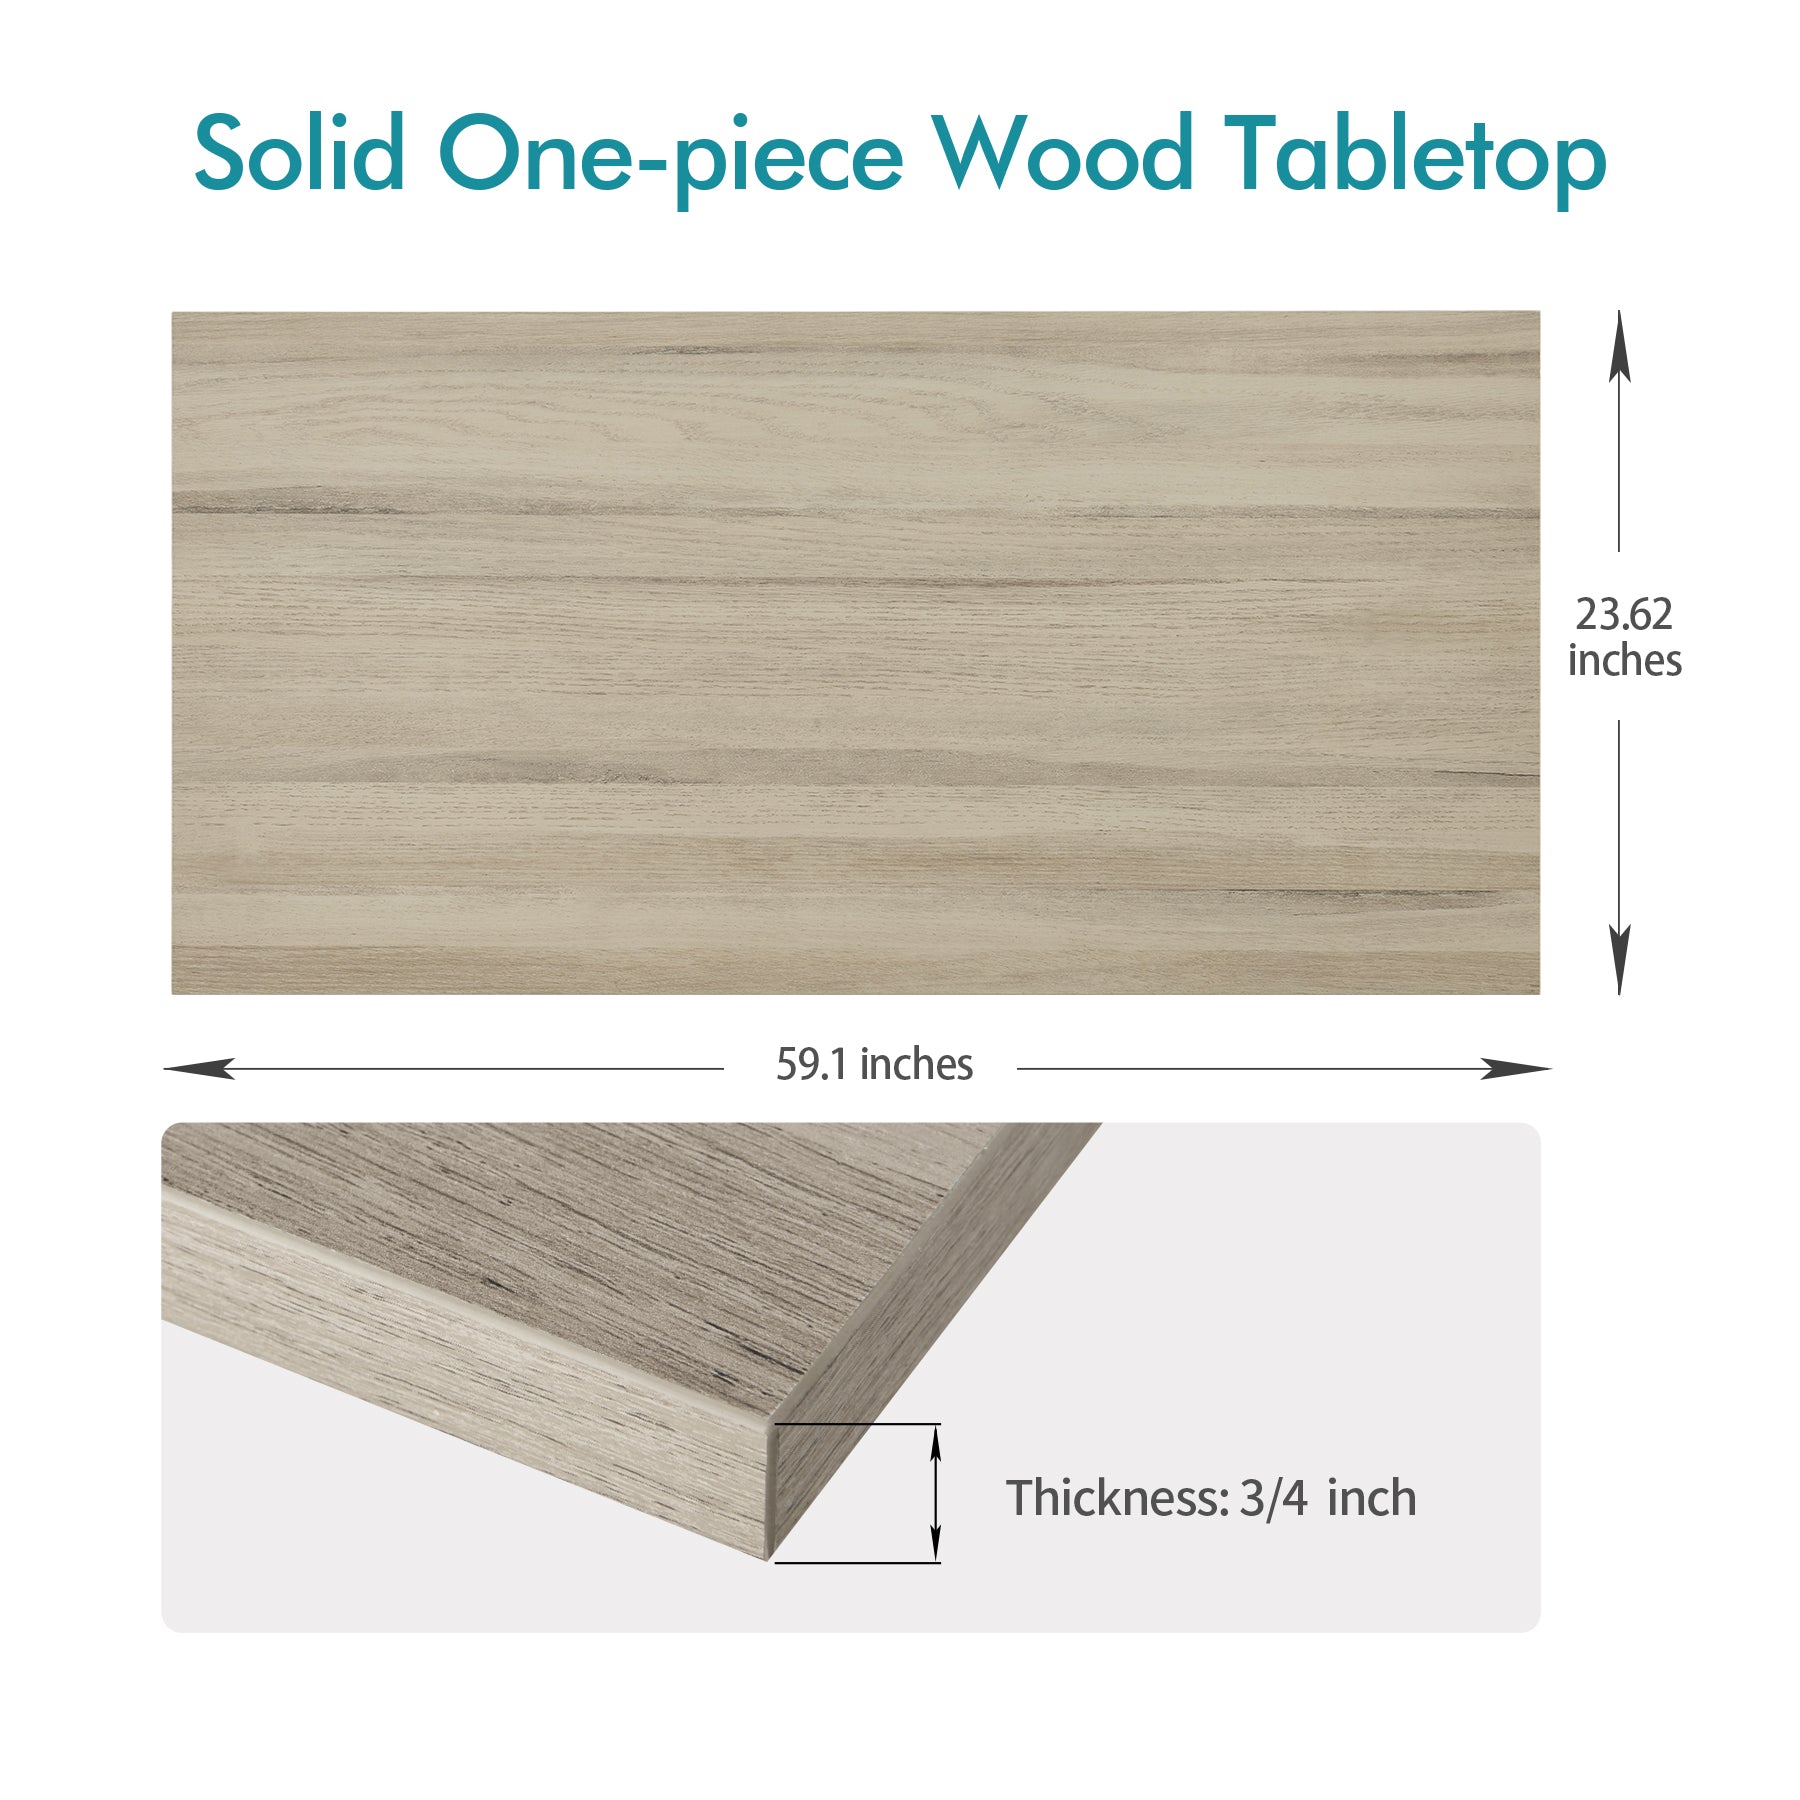 60x24 one-piece wood table top in oak